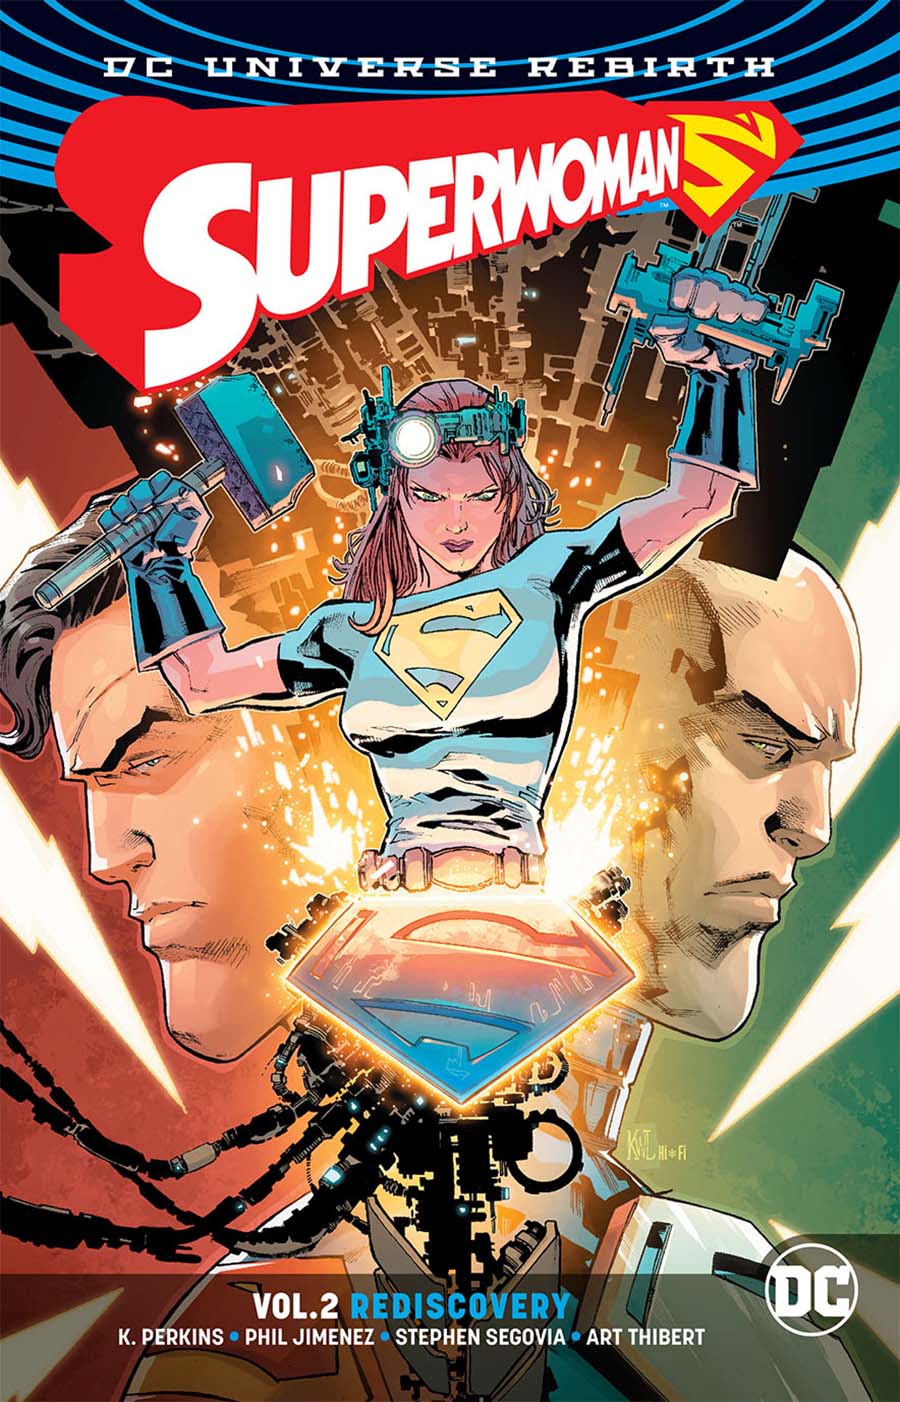 Superwoman (Rebirth) Vol 2 Rediscovery TP